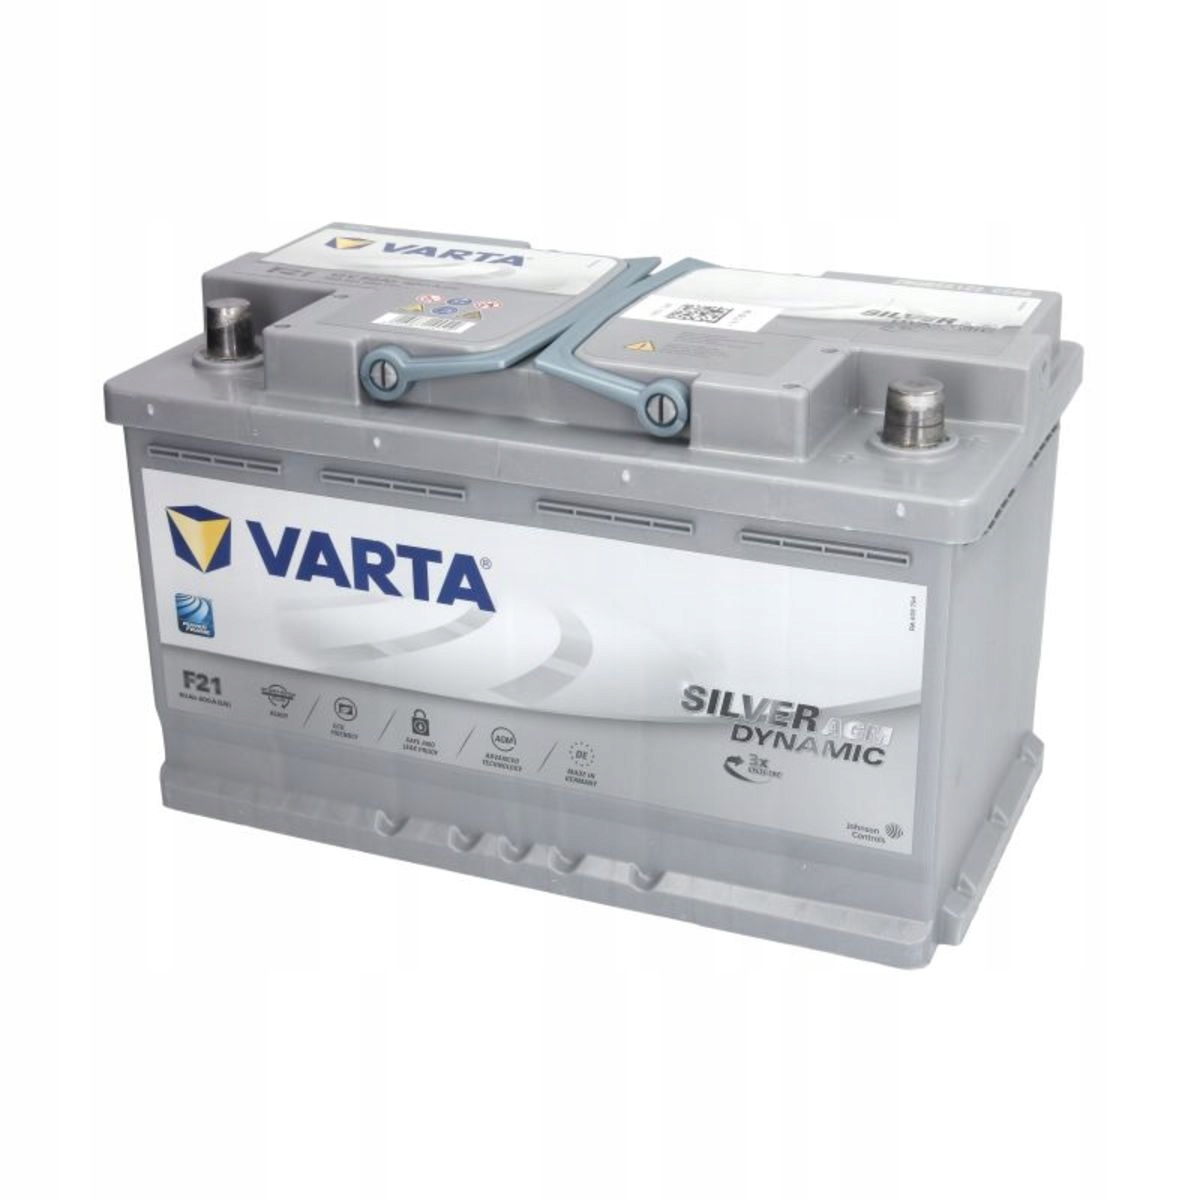 12V 80Ah 800A Yuasa YBX9115 AGM Autobatterie